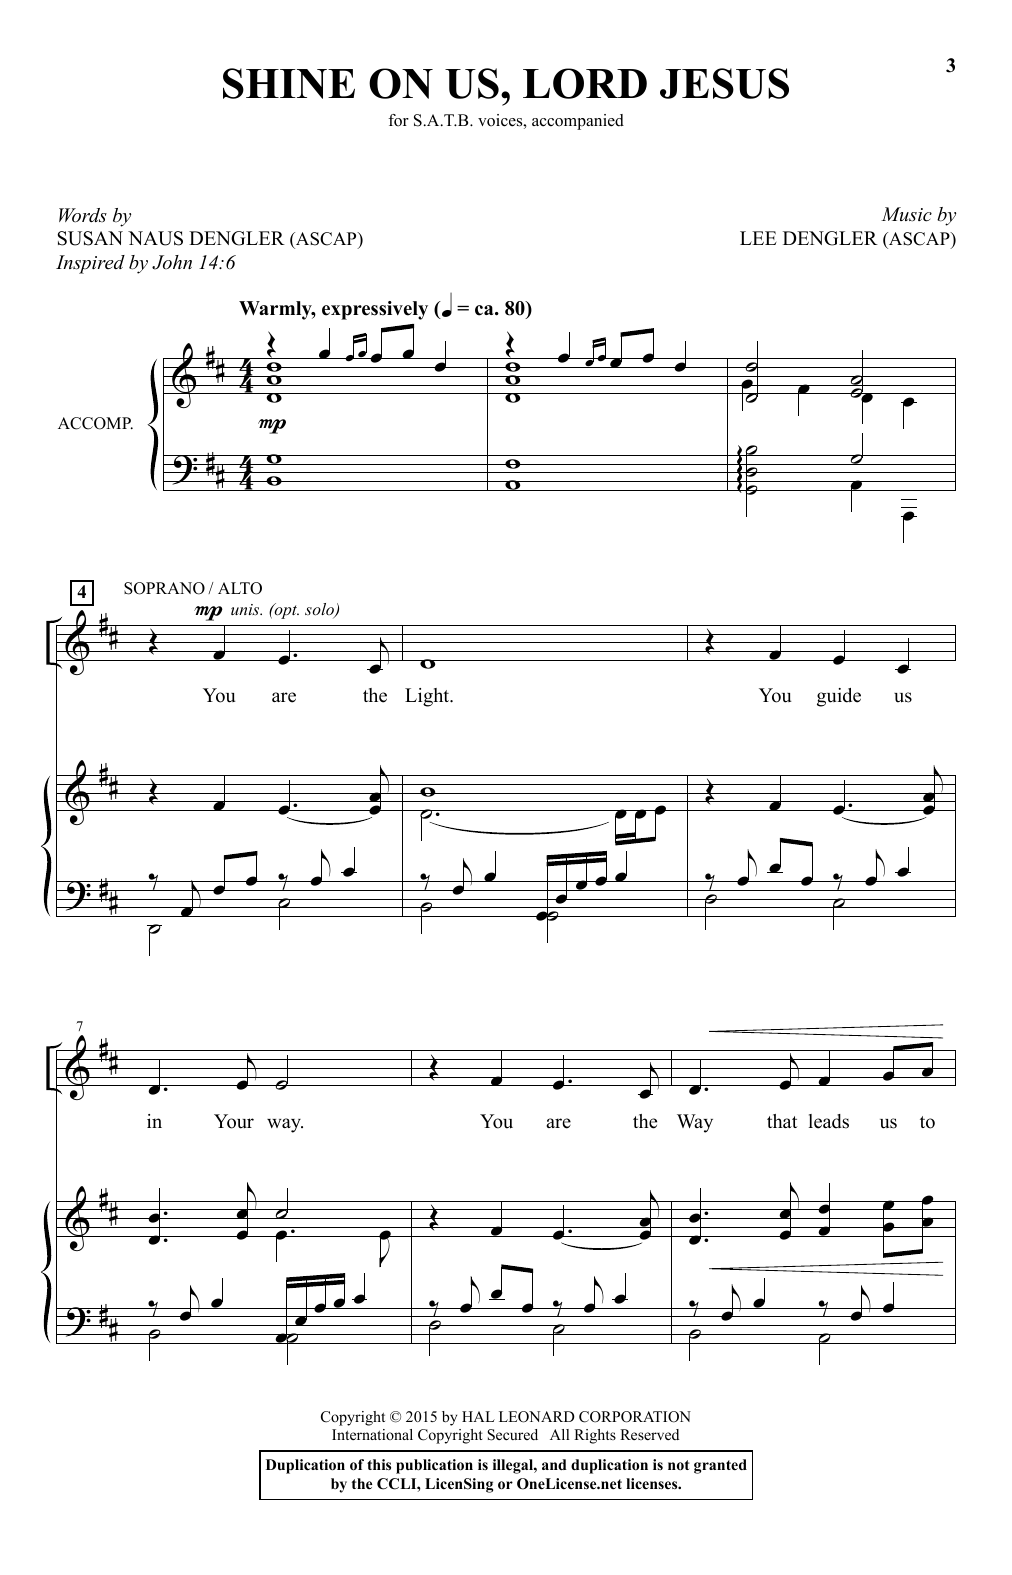 Lee Dengler Shine On Us, Lord Jesus Sheet Music Notes & Chords for SATB - Download or Print PDF